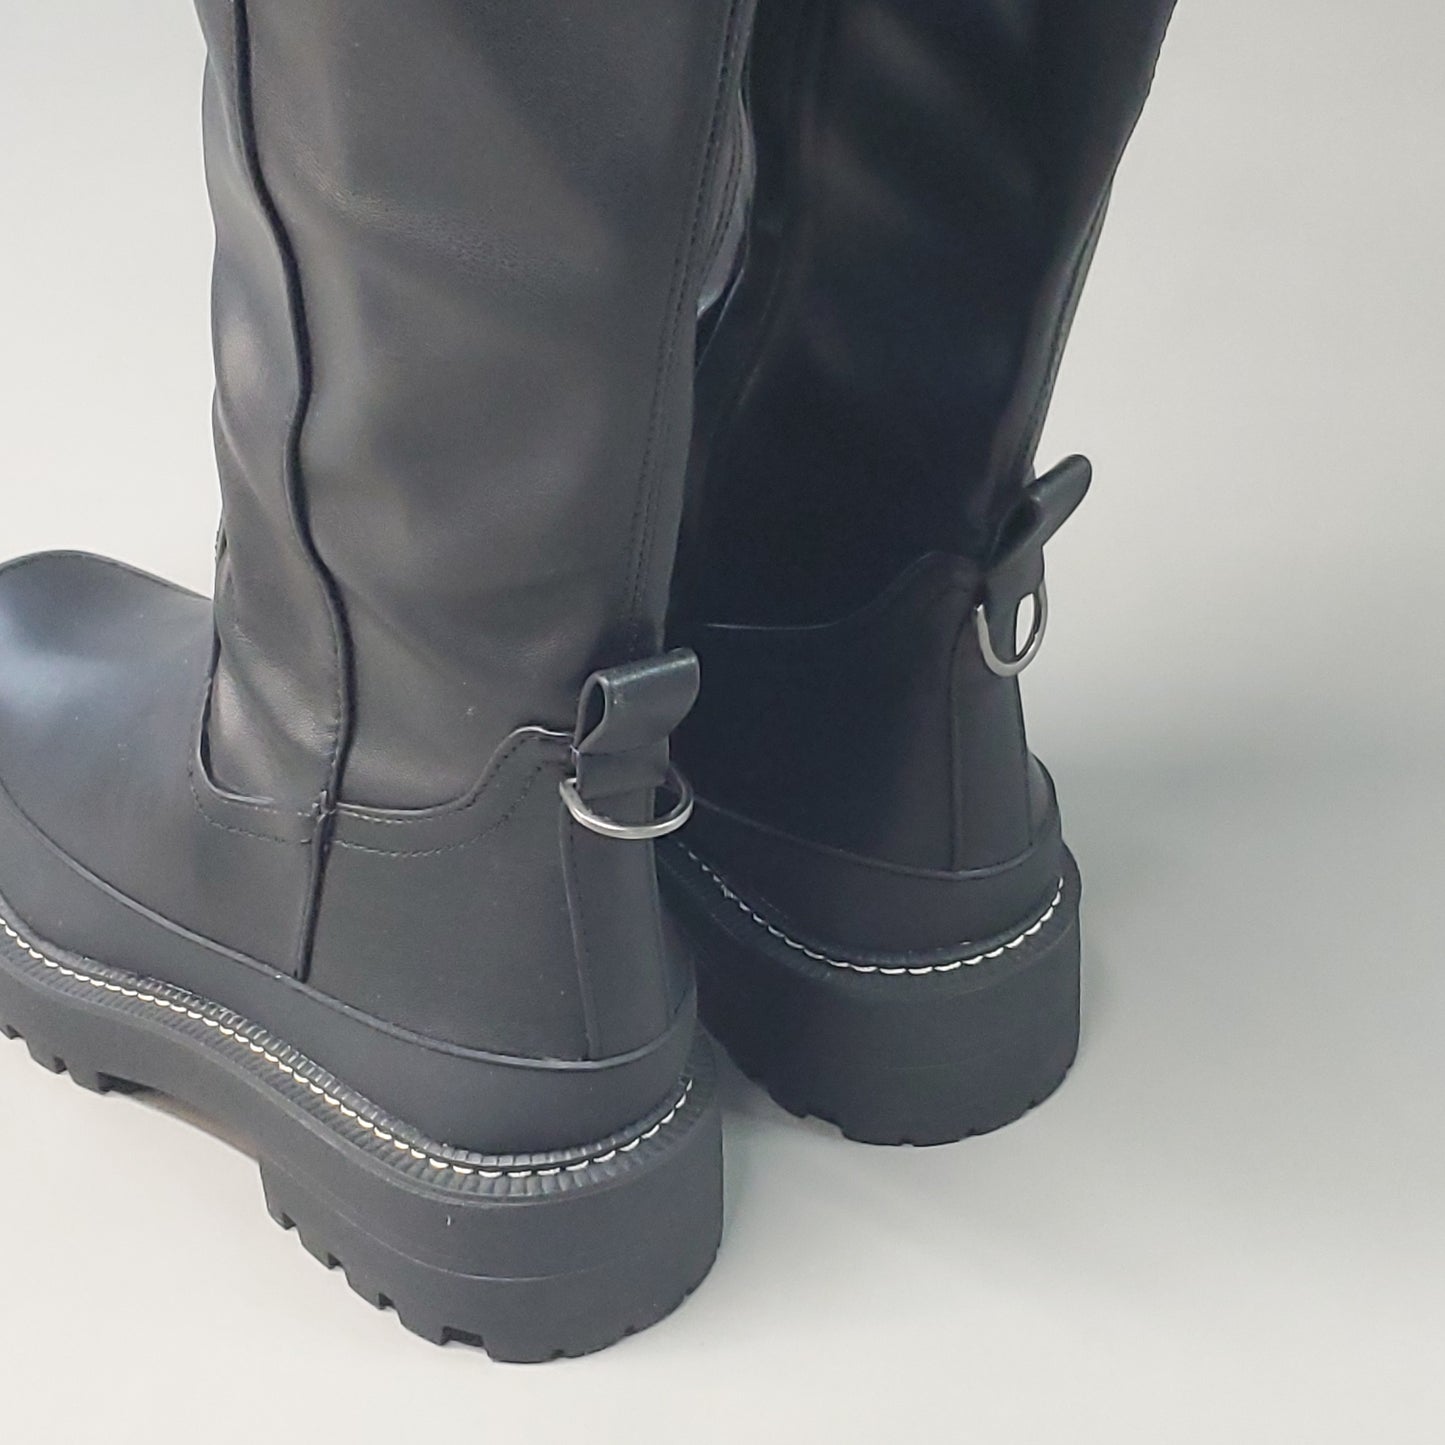 SAM EDELMAN Lerue Nappa Tall Leather Riding Boots Women's Sz 9.5 M Black H8522L1001 (New)